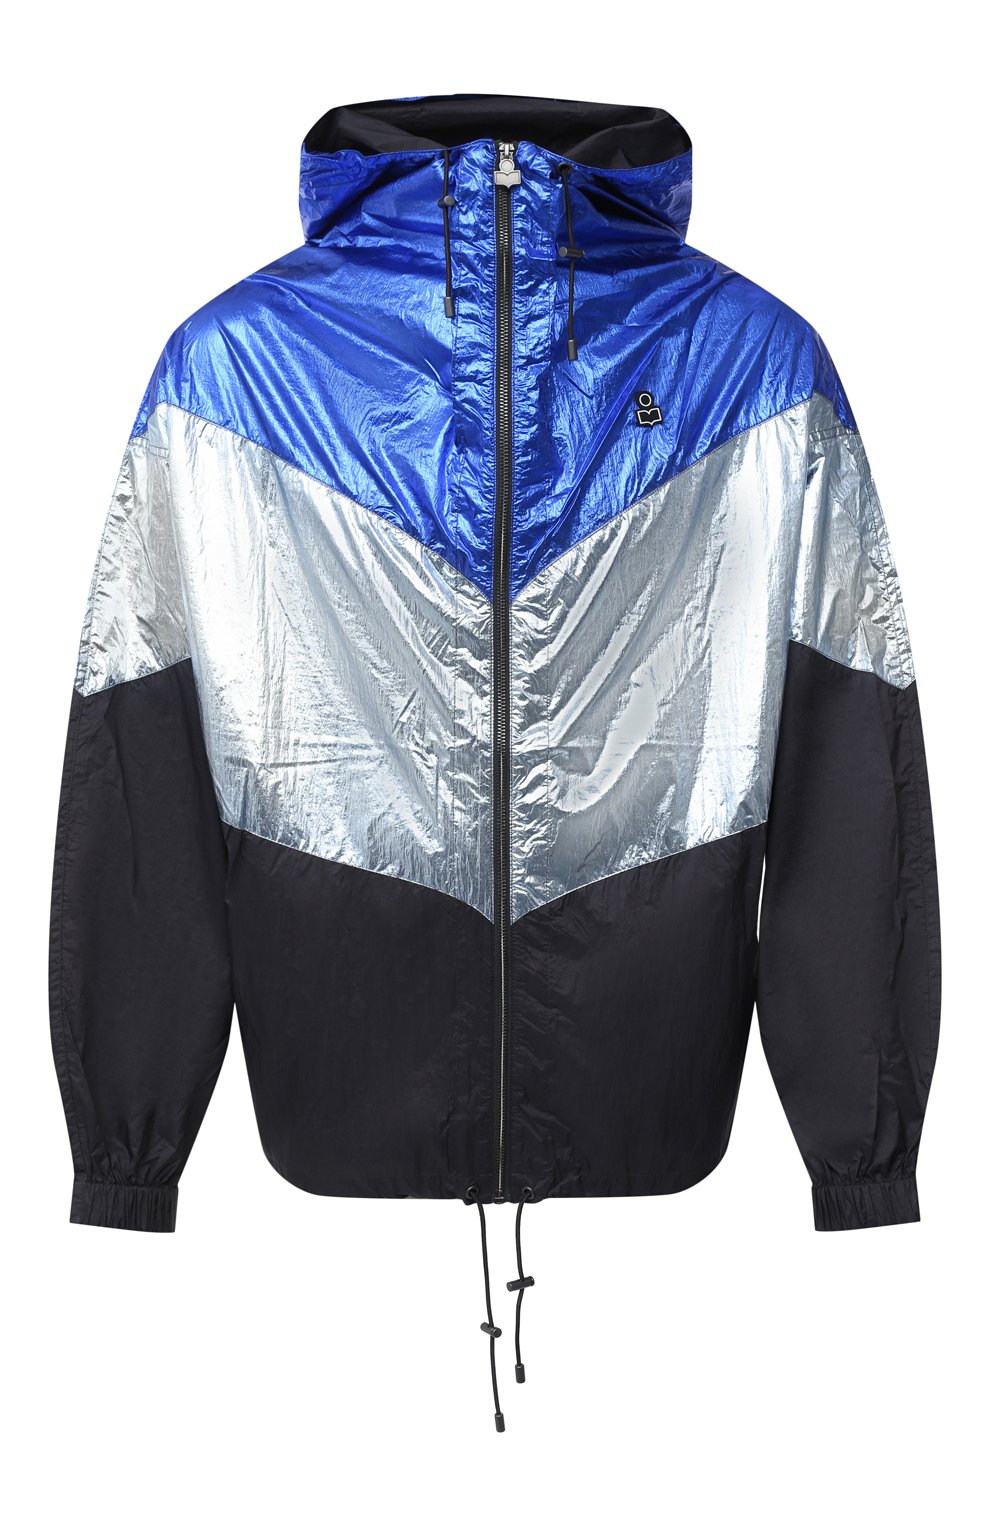 Мужская куртка ISABEL MARANT разноцветного цвета, арт. MA0808-20A001V/KIZZA0H | Фото 1 (Кросс-КТ: Куртка, Ветровка; Рукава: Длинные; Материал внешний: Синтетический материал; Стили: Спорт-шик; Мужское Кросс-КТ: Верхняя одежда; Длина (верхняя одежда): Короткие)